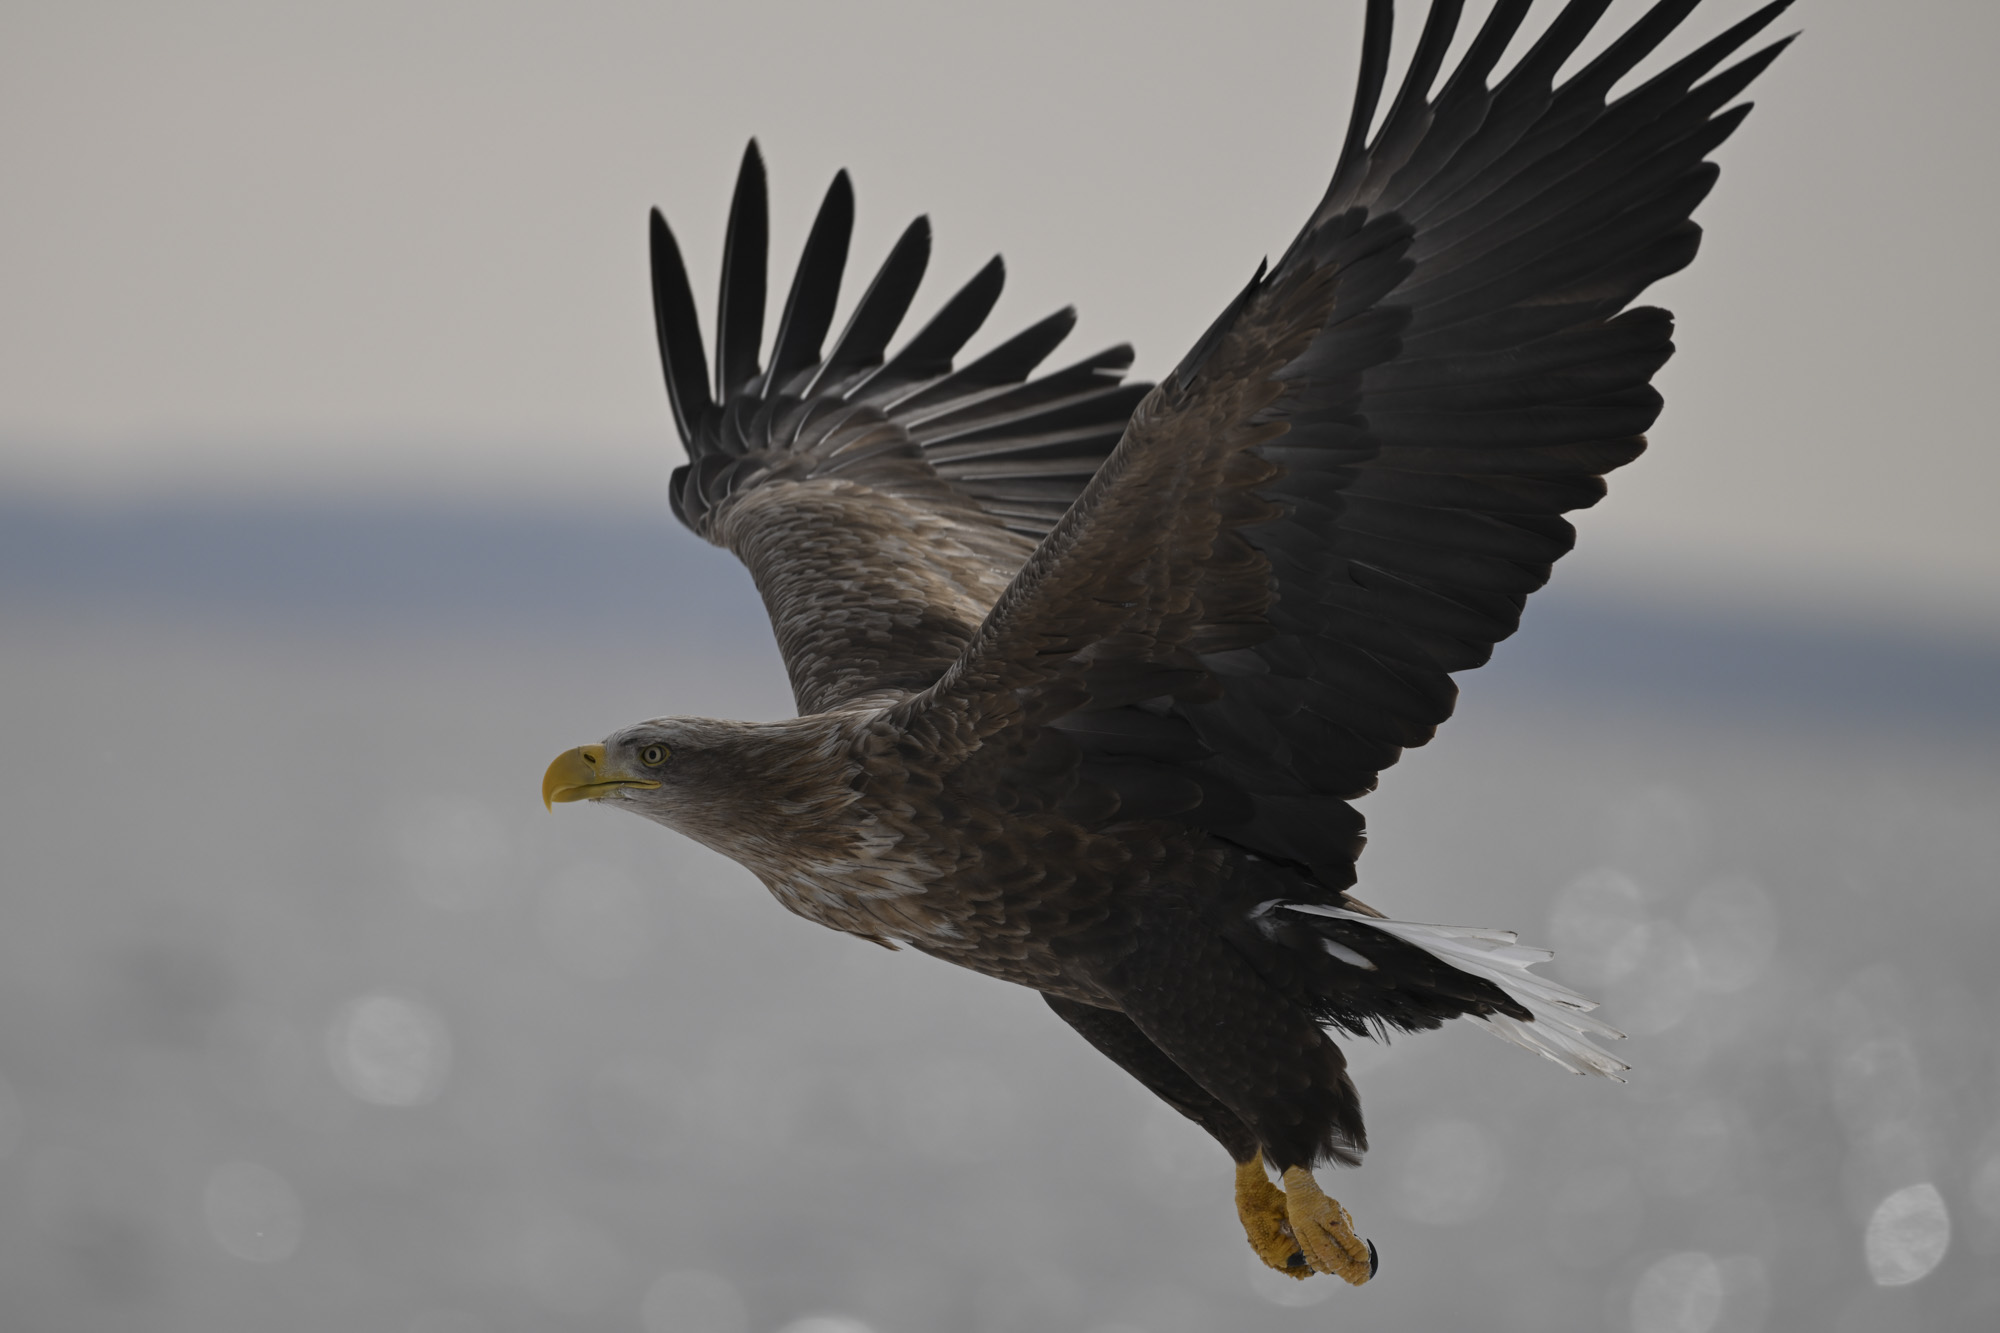 Sample image taken with the Nikkor Z 180-600mm lens closeup of a bird of prey in flight